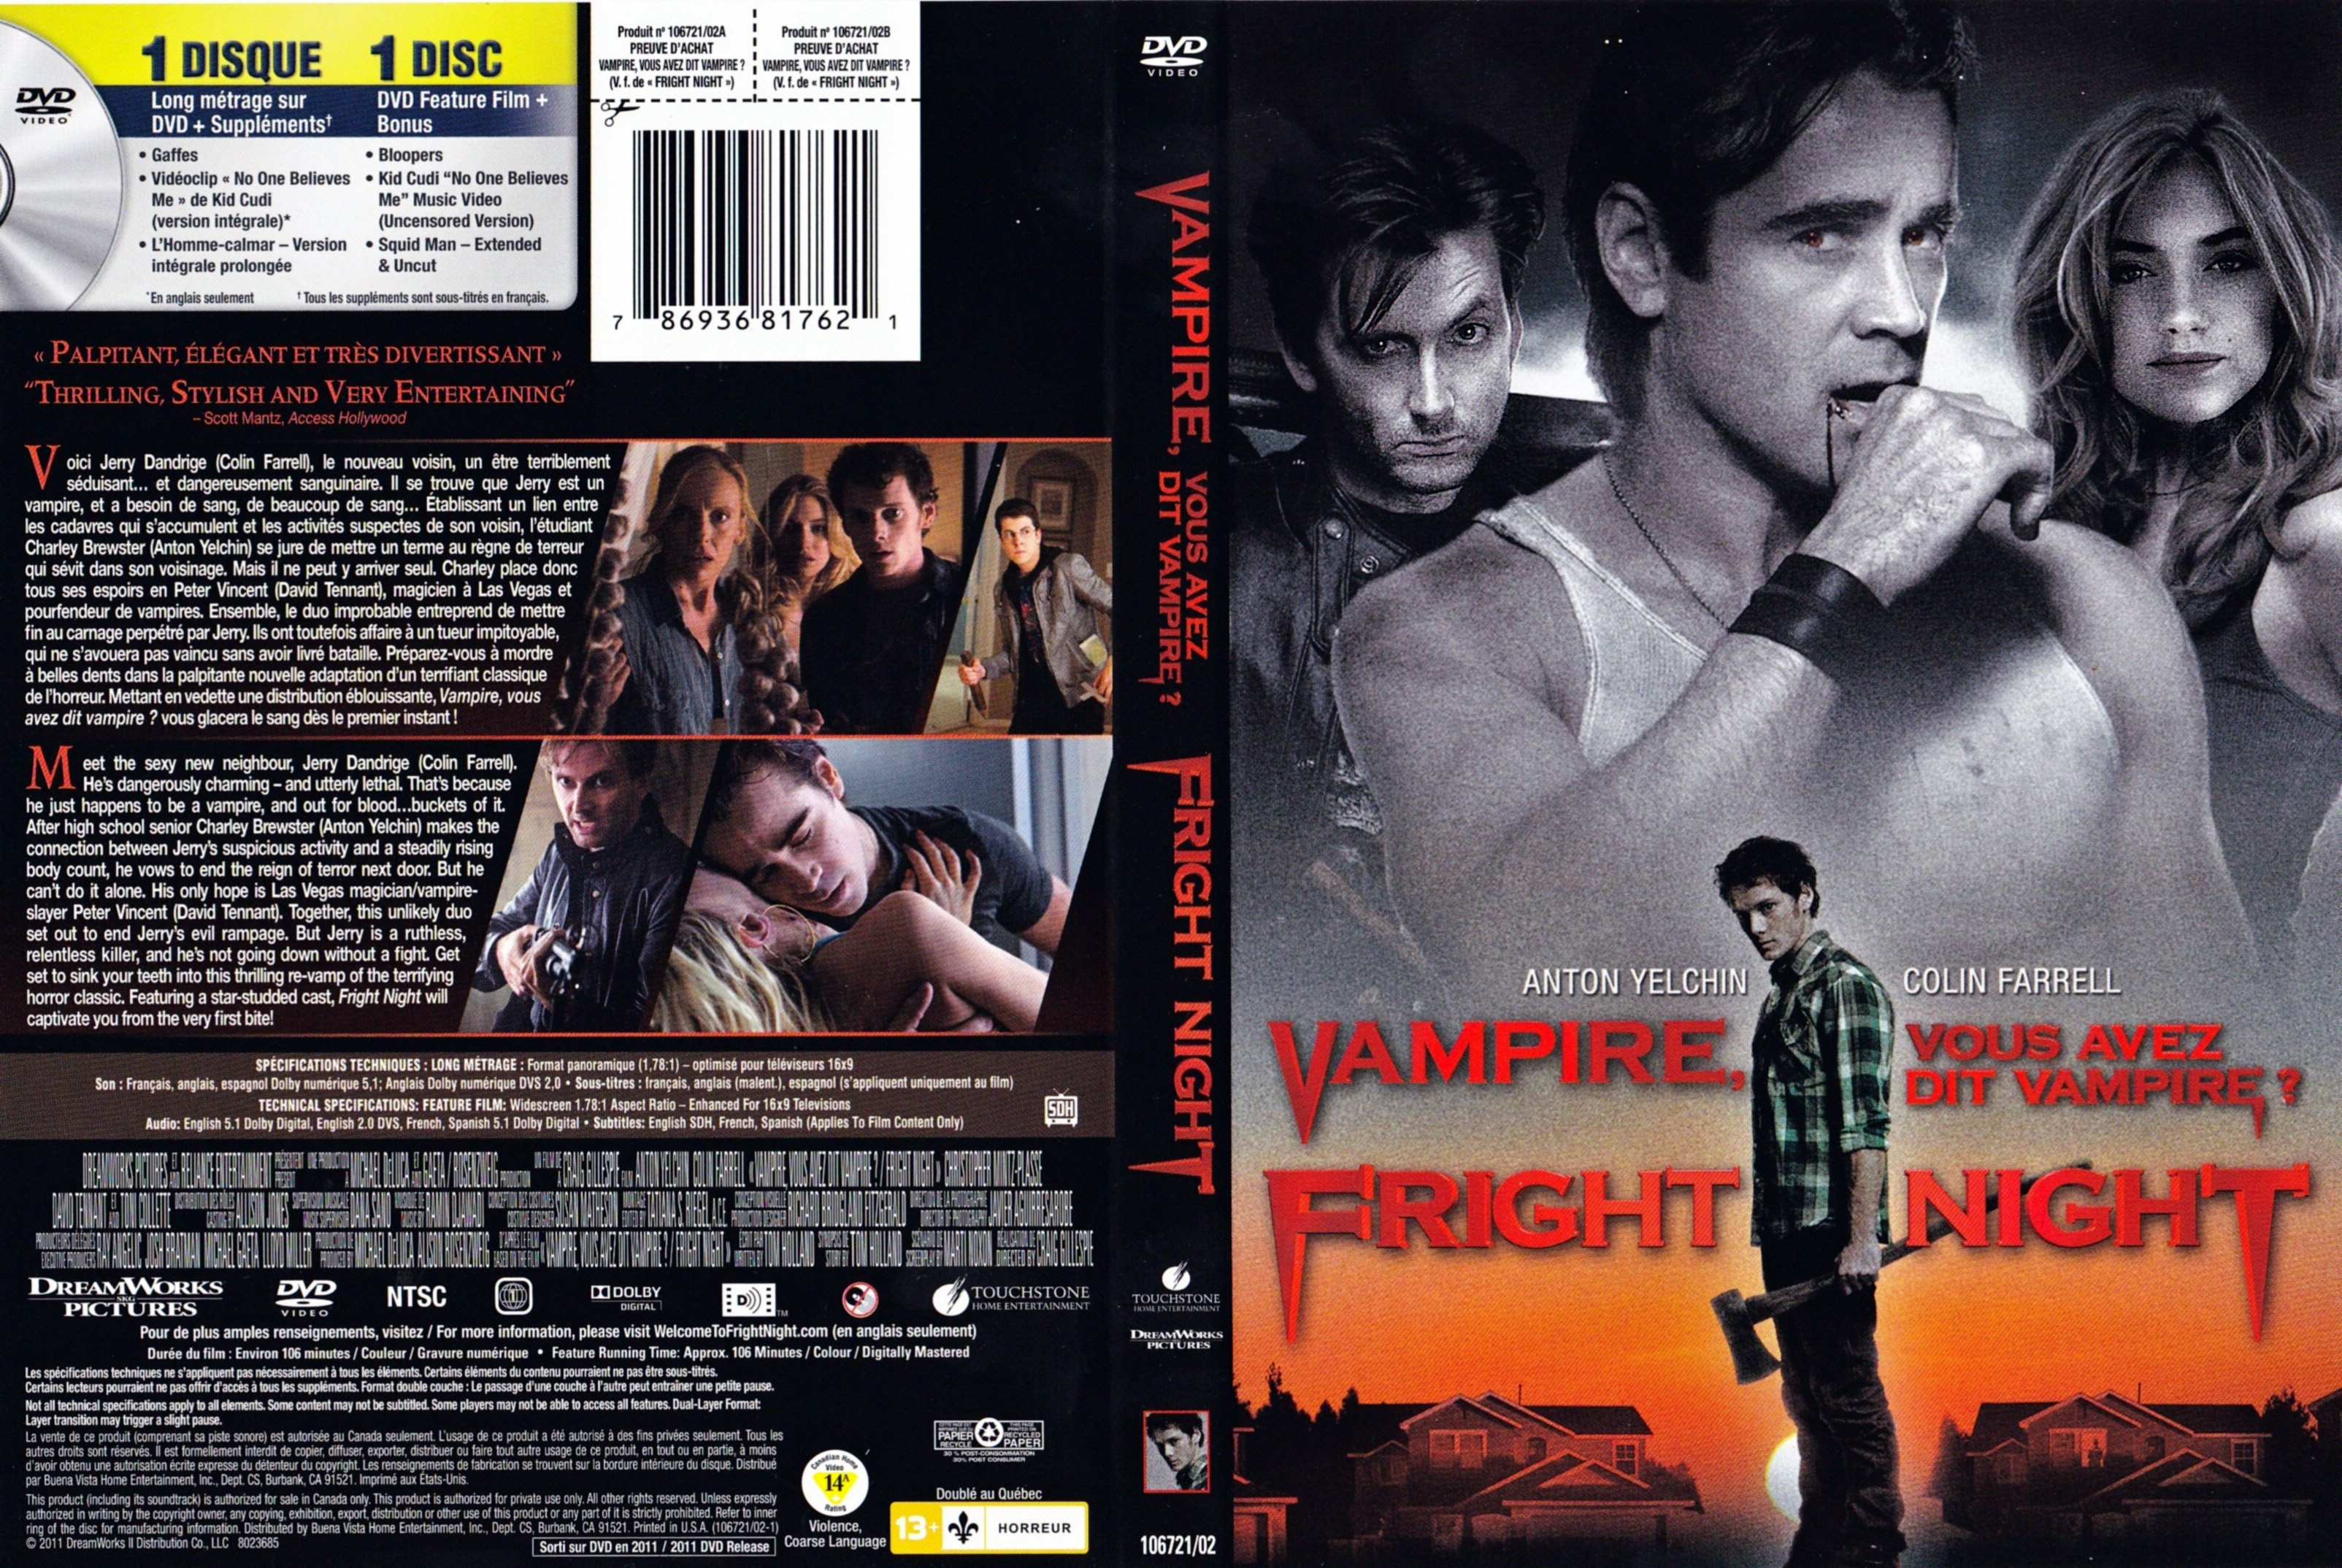 Jaquette DVD Vampire vous avez dit Vampire - Fright night (Canadienne)